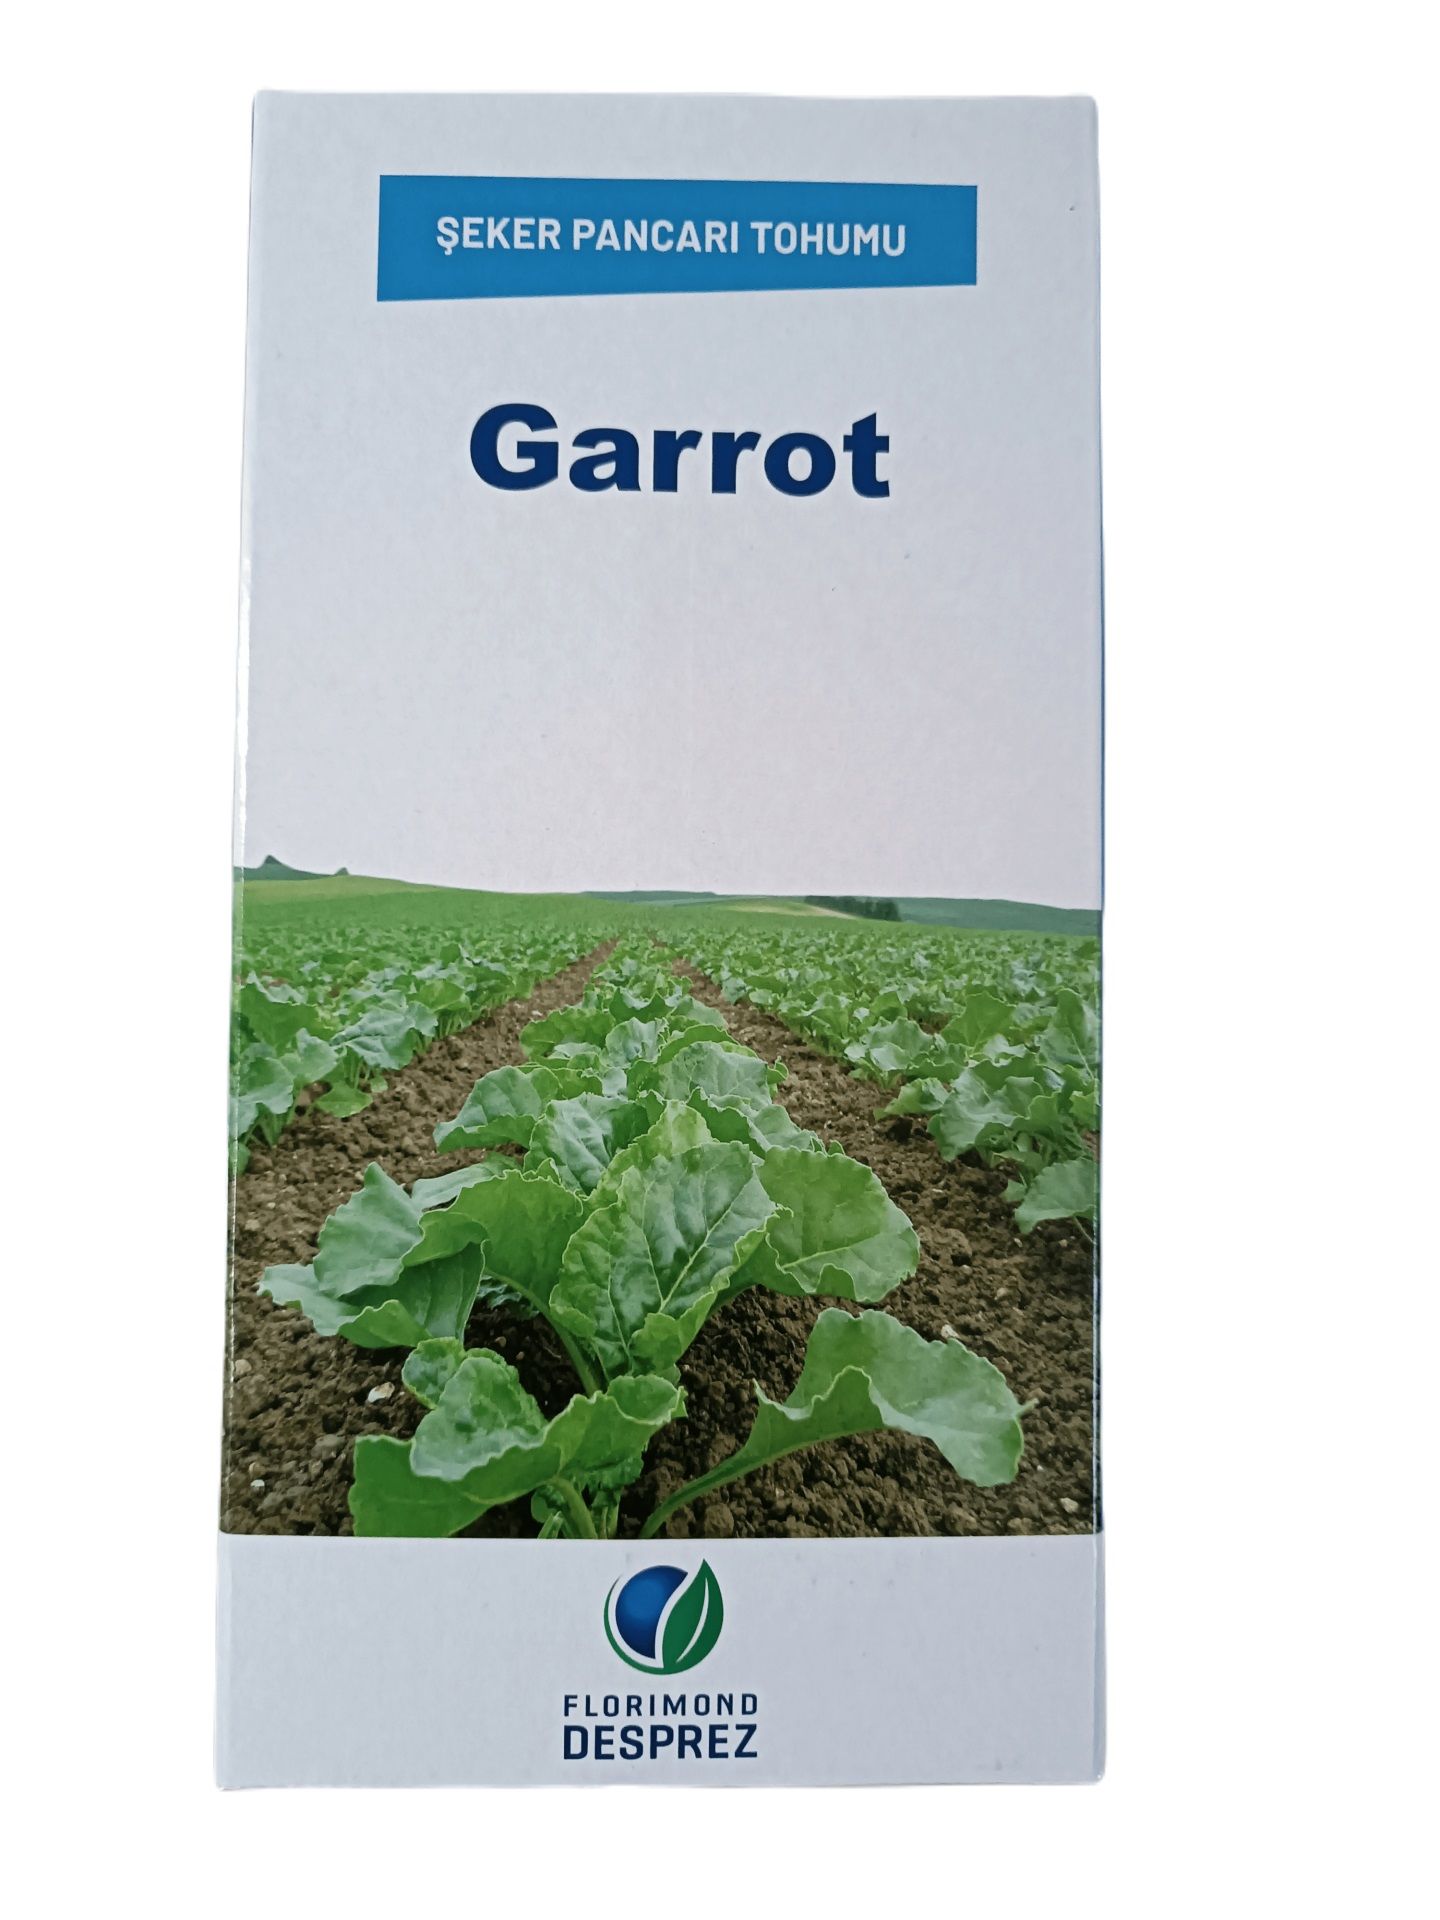 Garrot Sugar Beet Seed Coated Medicated - 100,000 Pieces